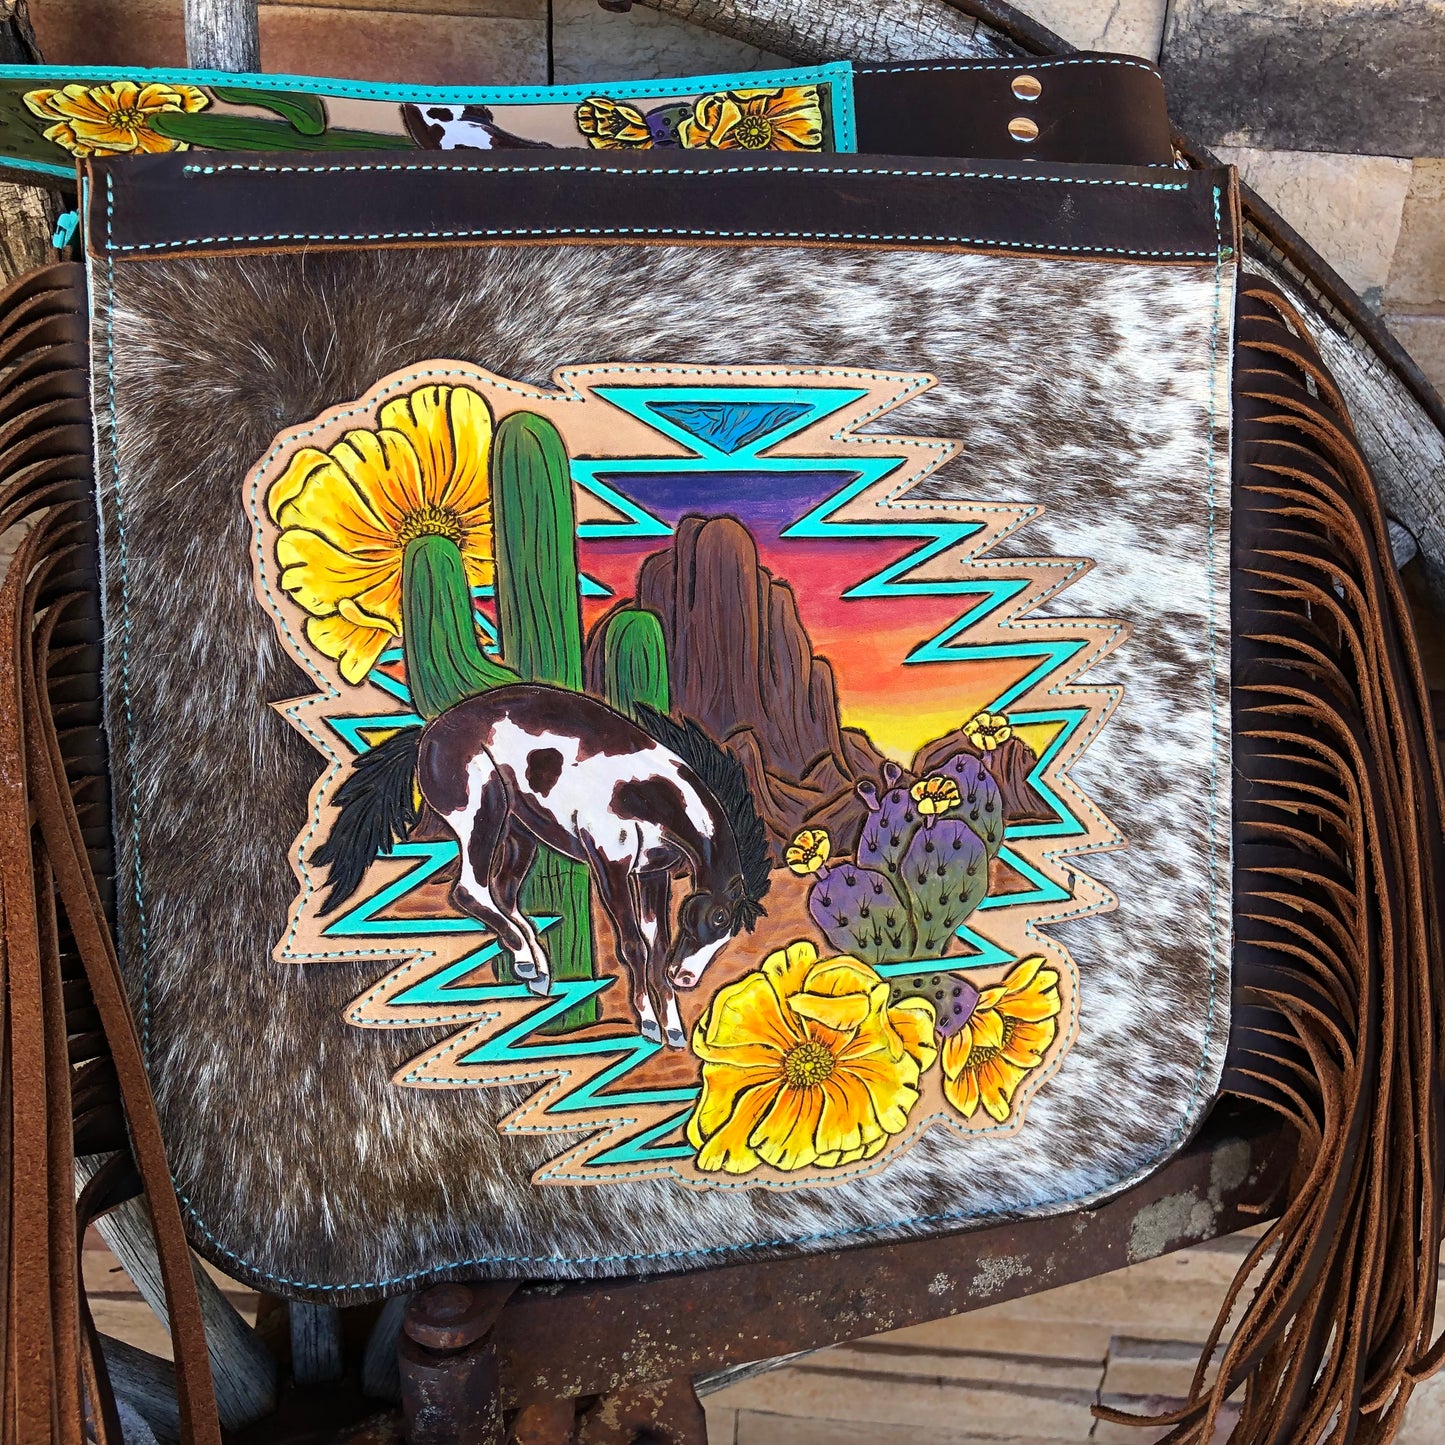 Western tooled leather desert bucking horse fringe cowhide crossbody purse